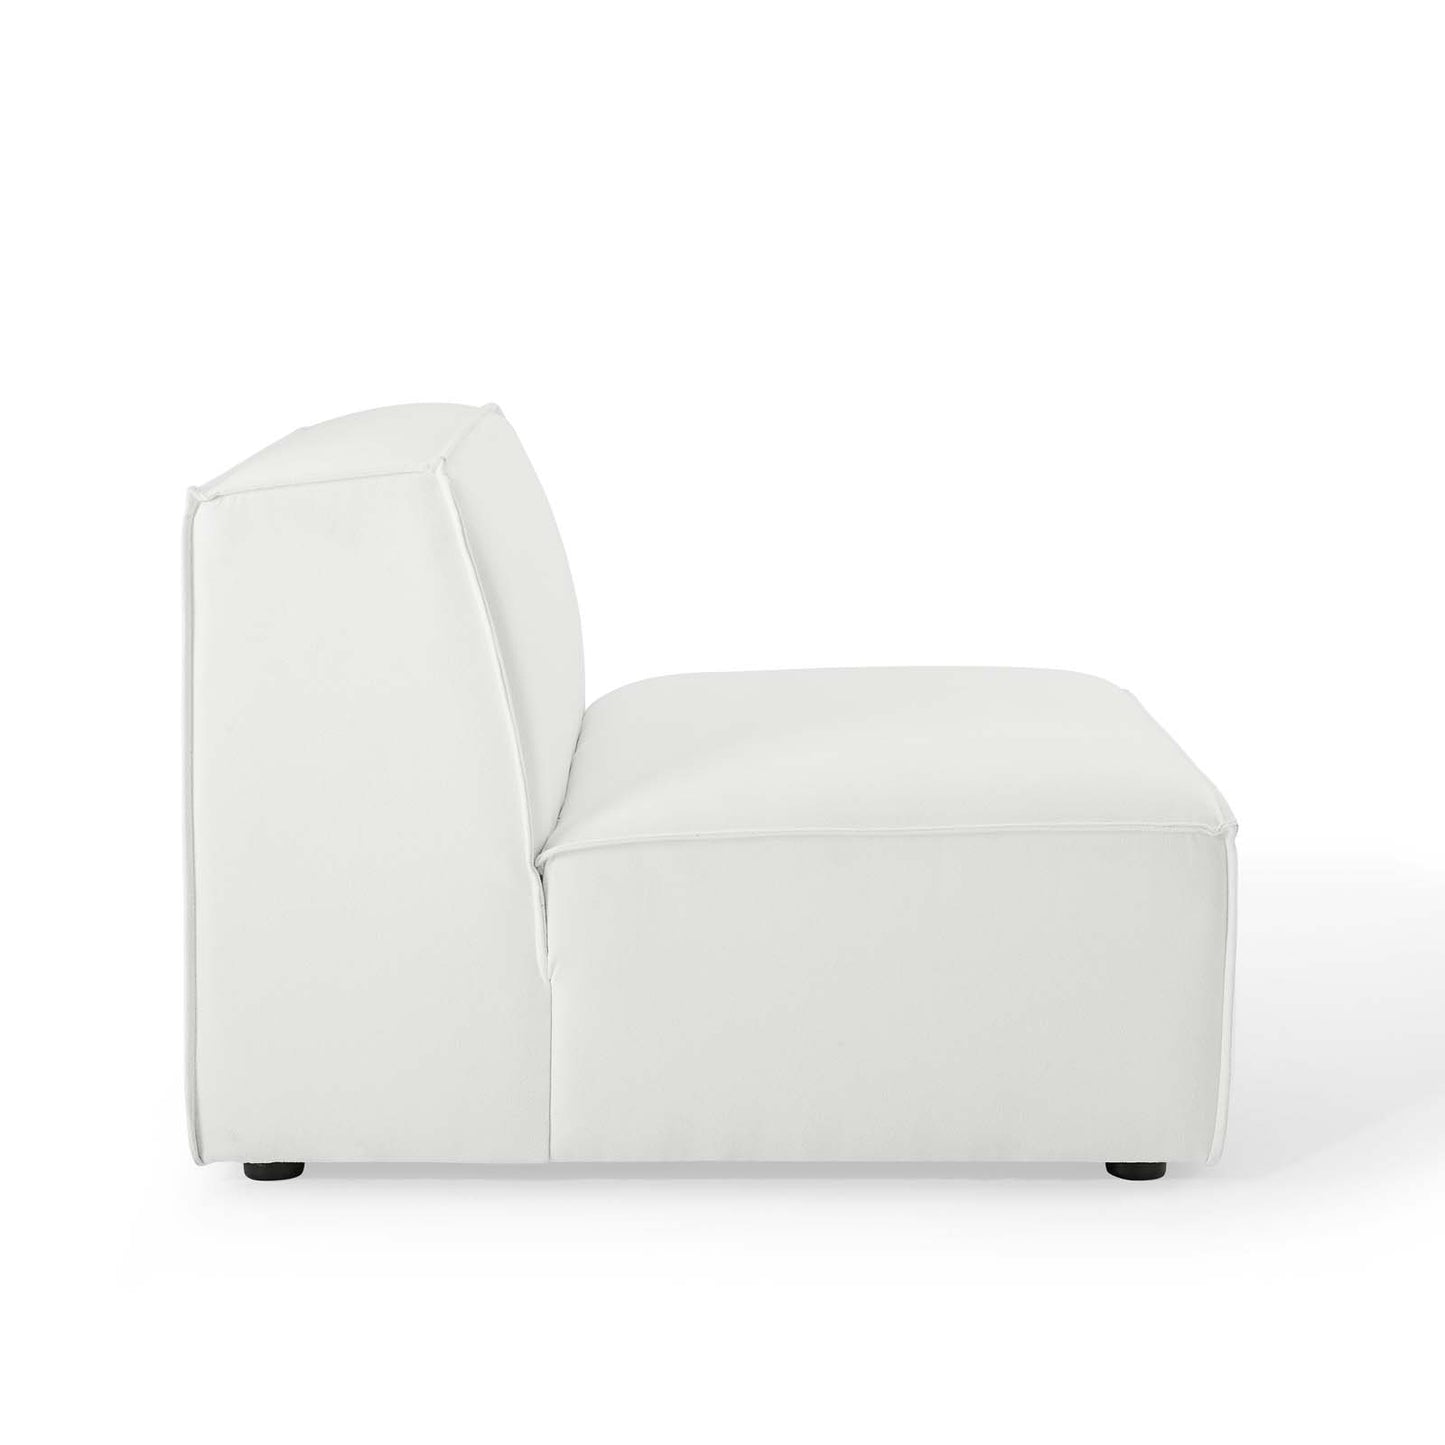 Restore 5-Piece Sectional Sofa White EEI-4115-WHI